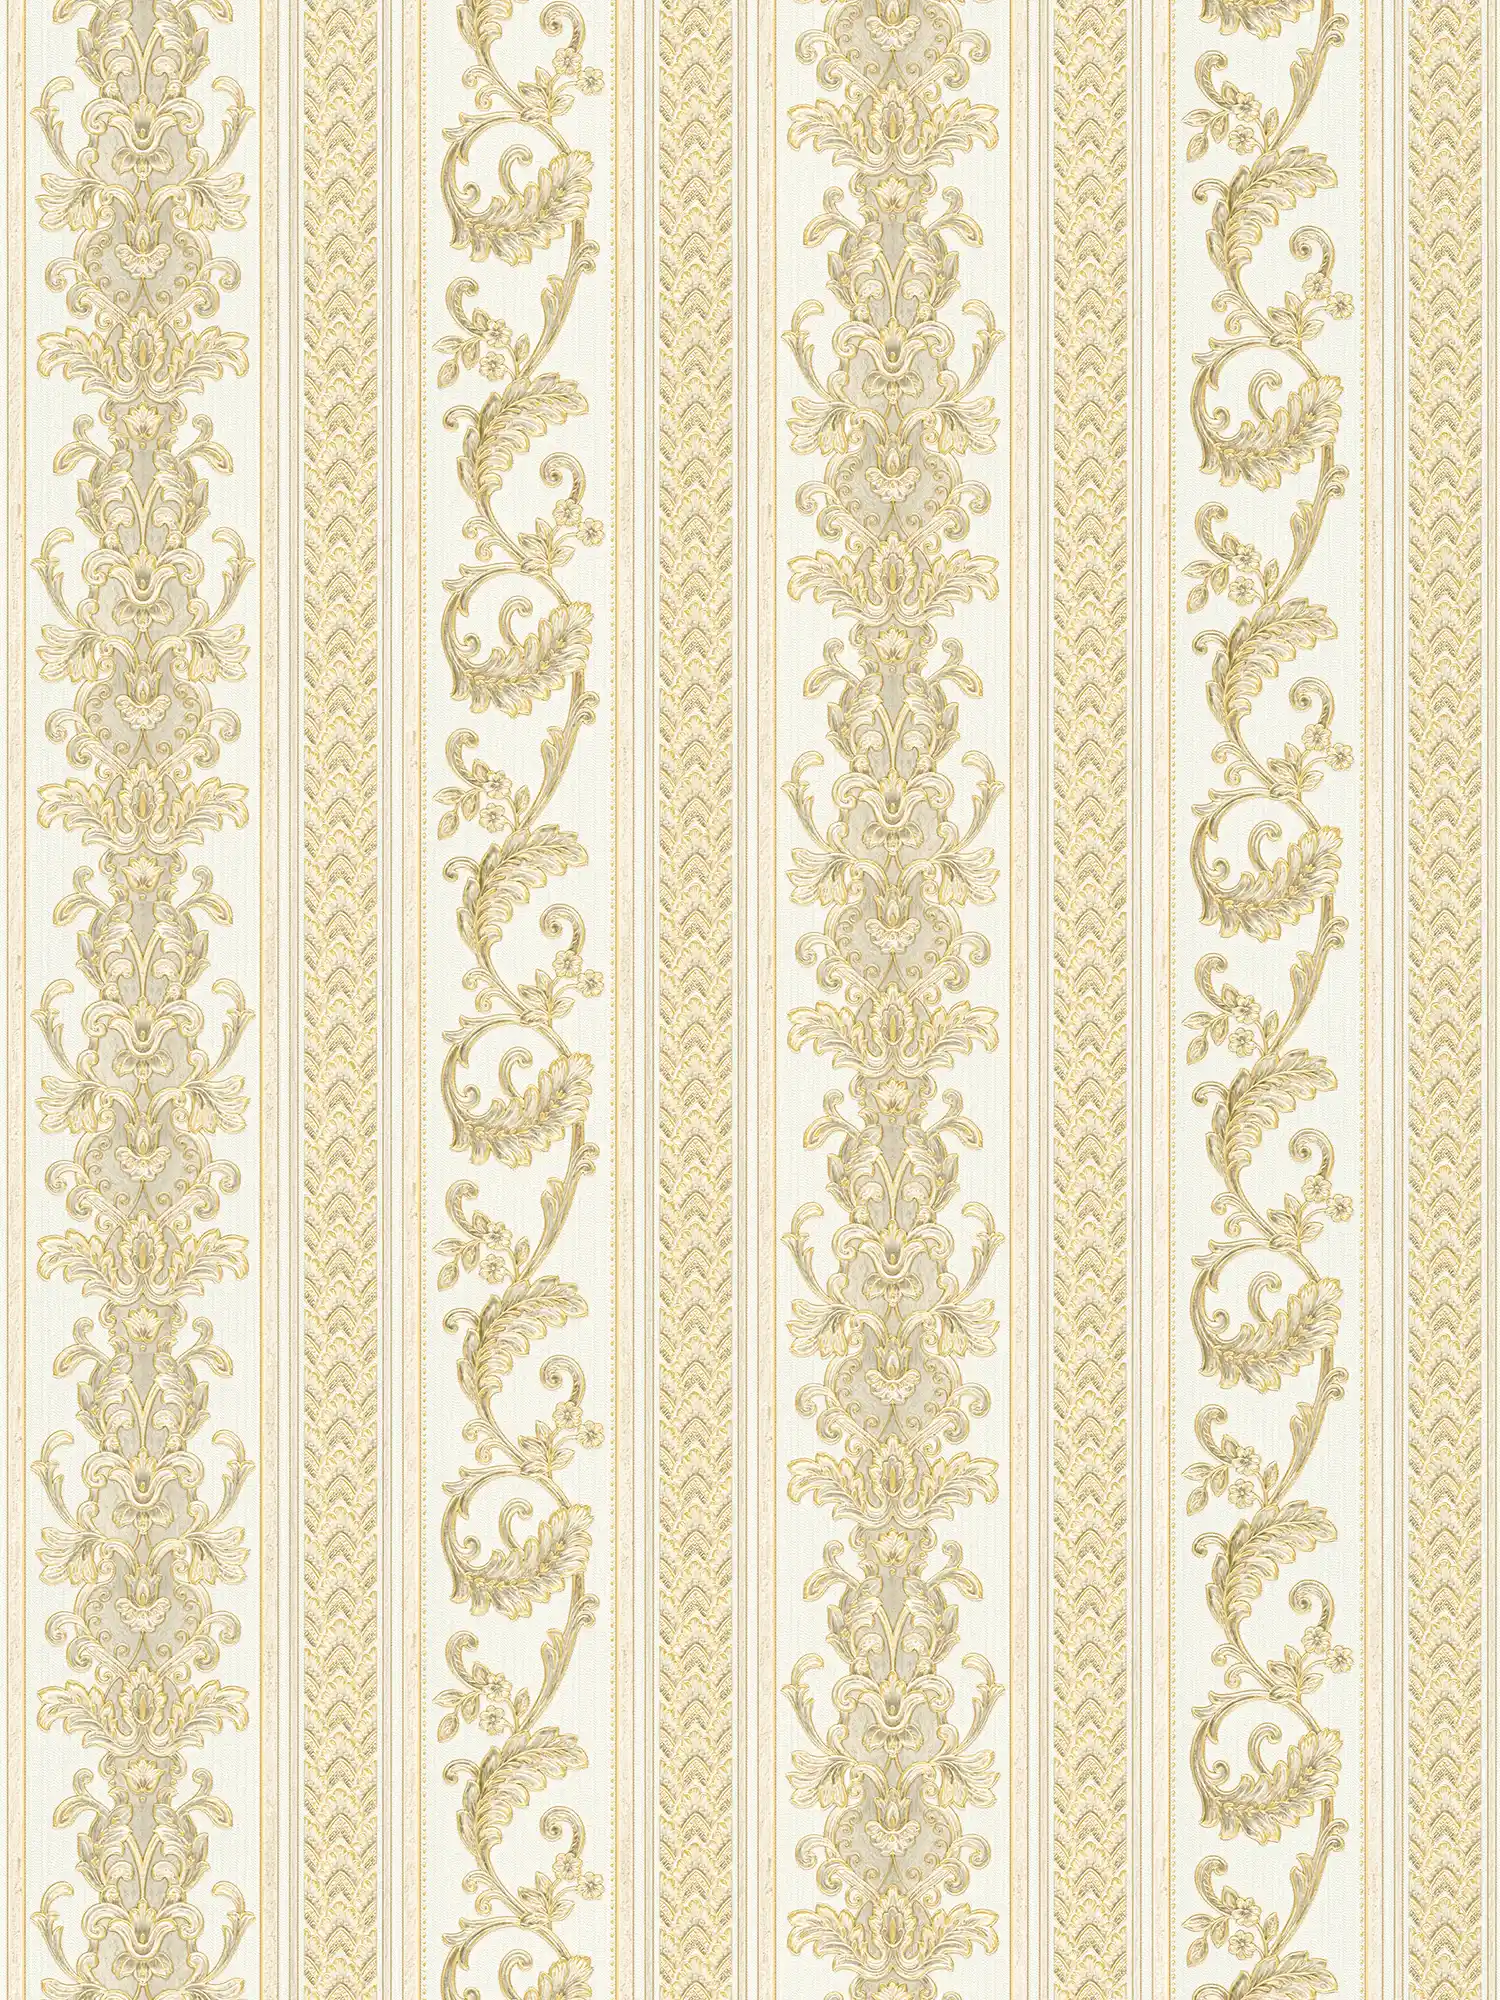         Barocke Streifentapete mit Ornamentmuster – Creme, Gold
    